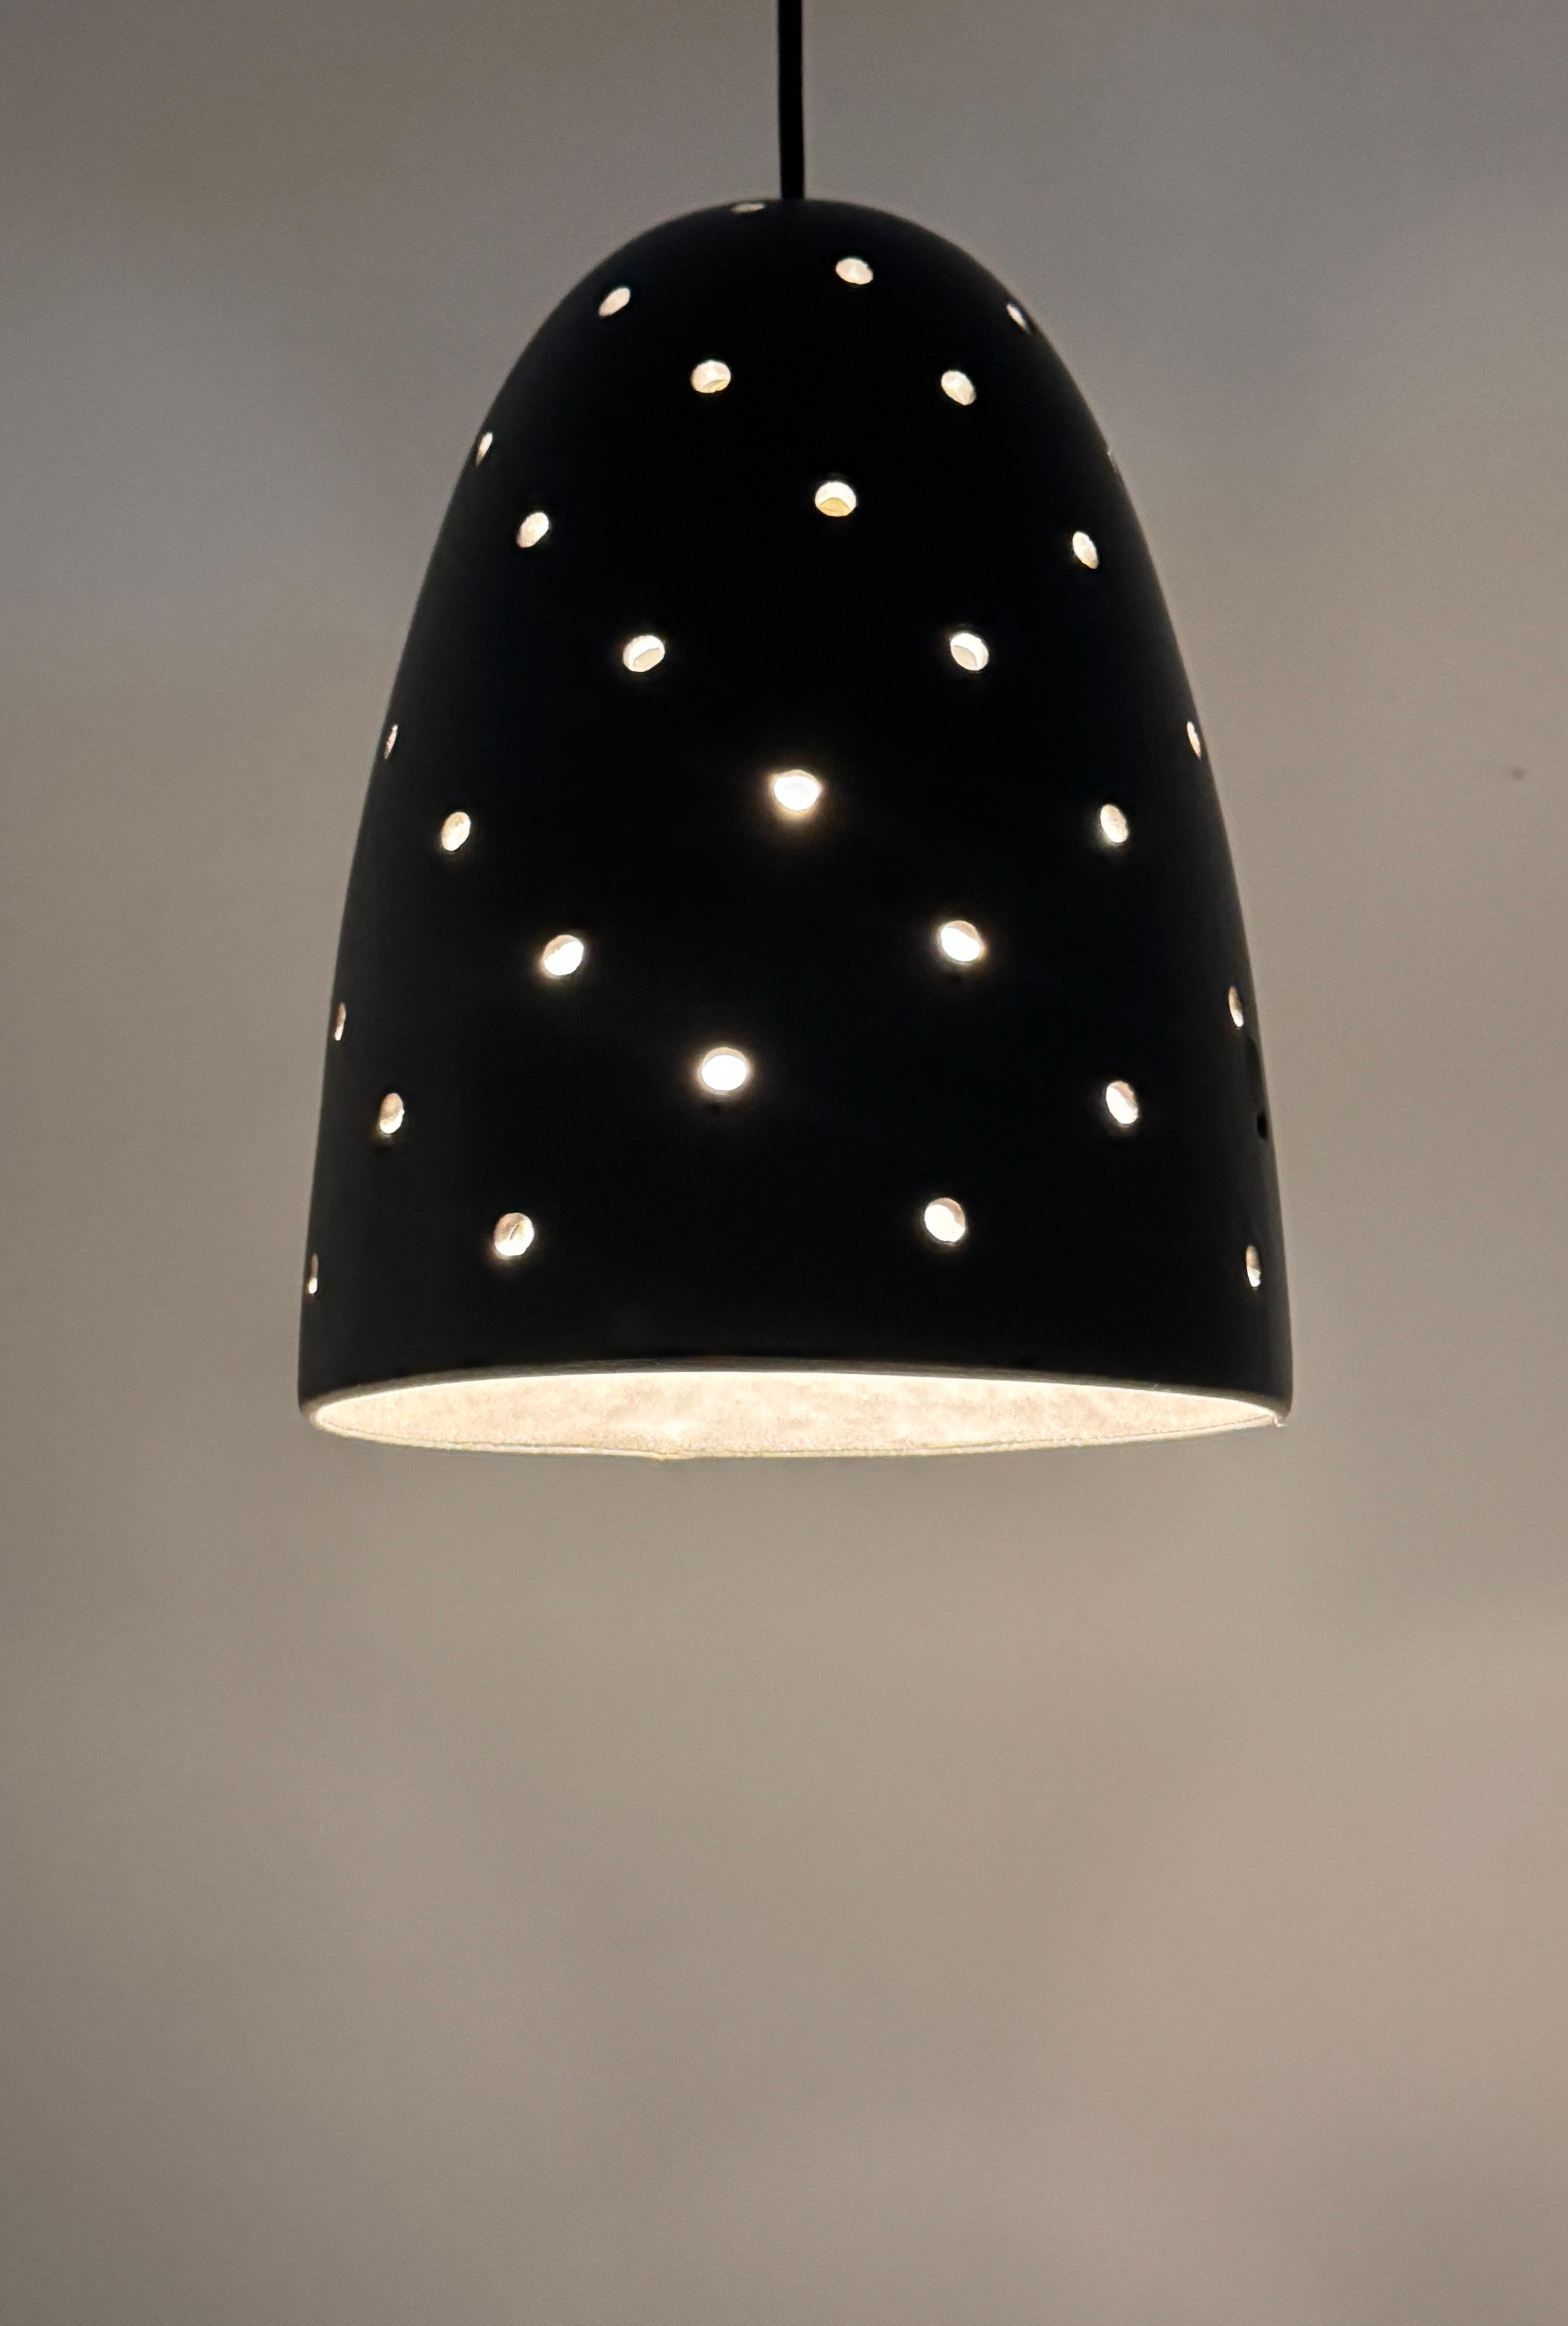 Gordon and Jane Martz Marshall Studios Pierced Black Ceramic Pendant Lamp 1960s In Good Condition In Troy, MI